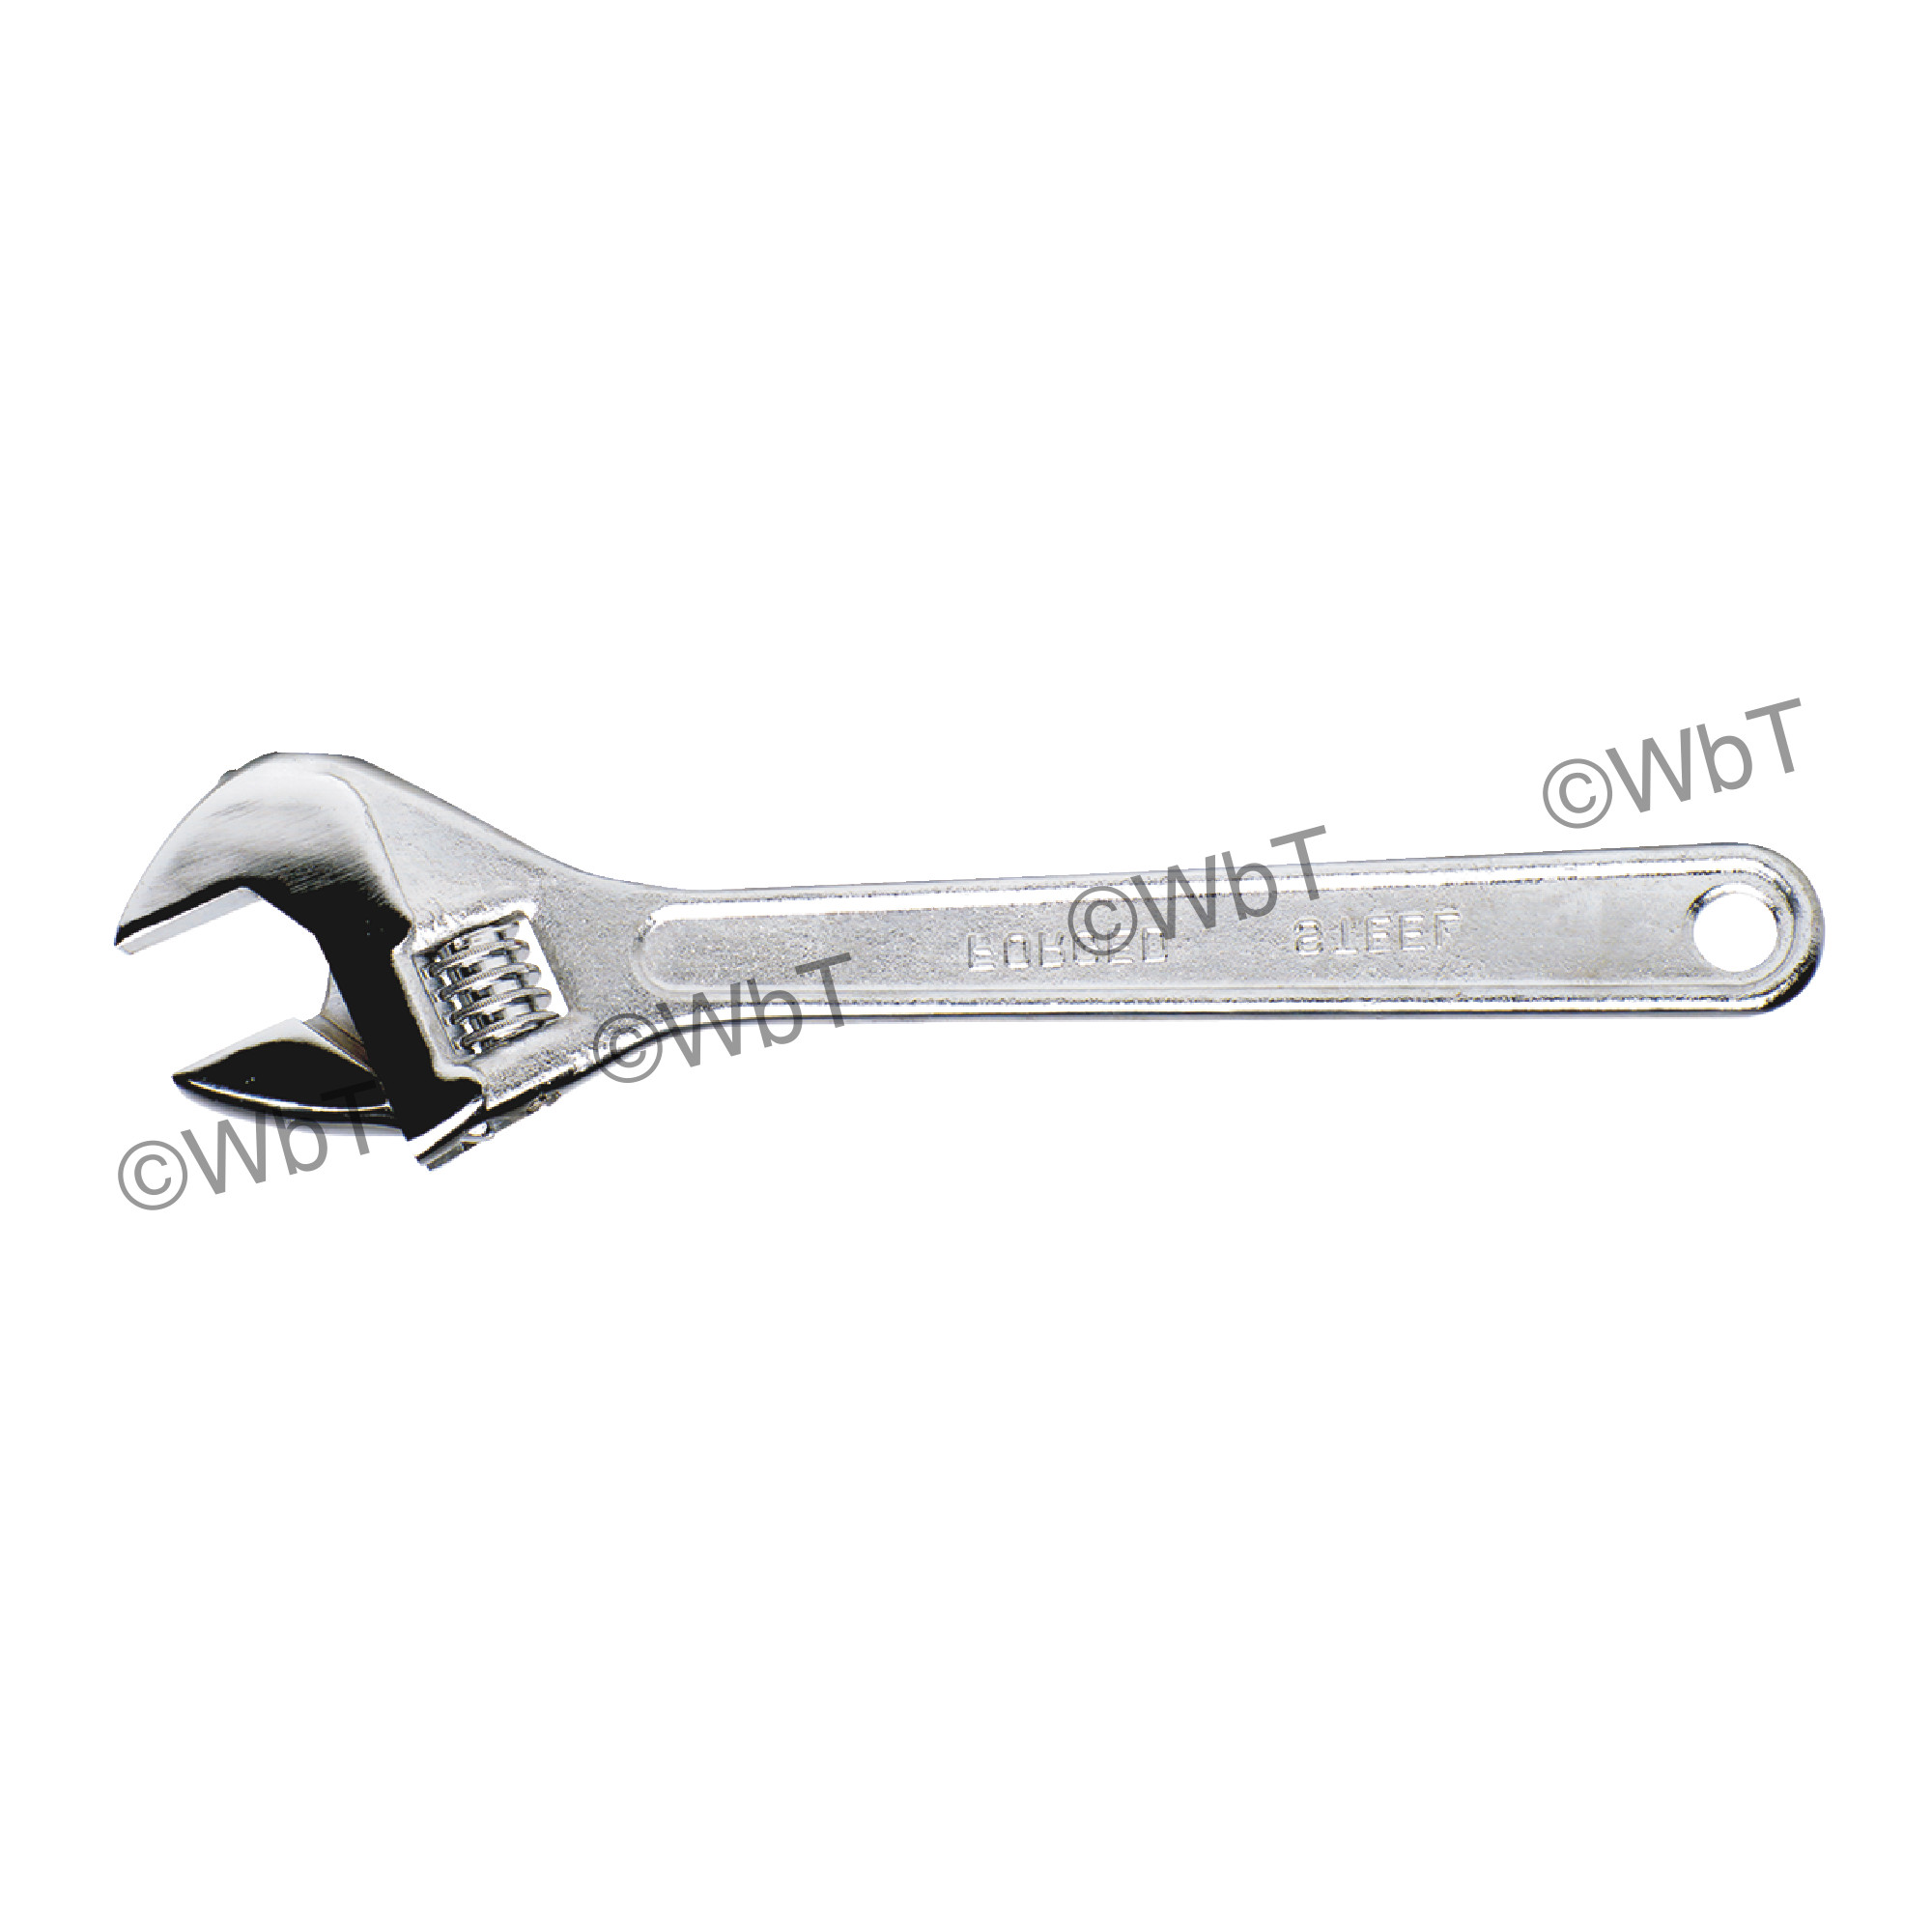 Adjustable Wrench - Model: TTC21012   SIZE: 10"